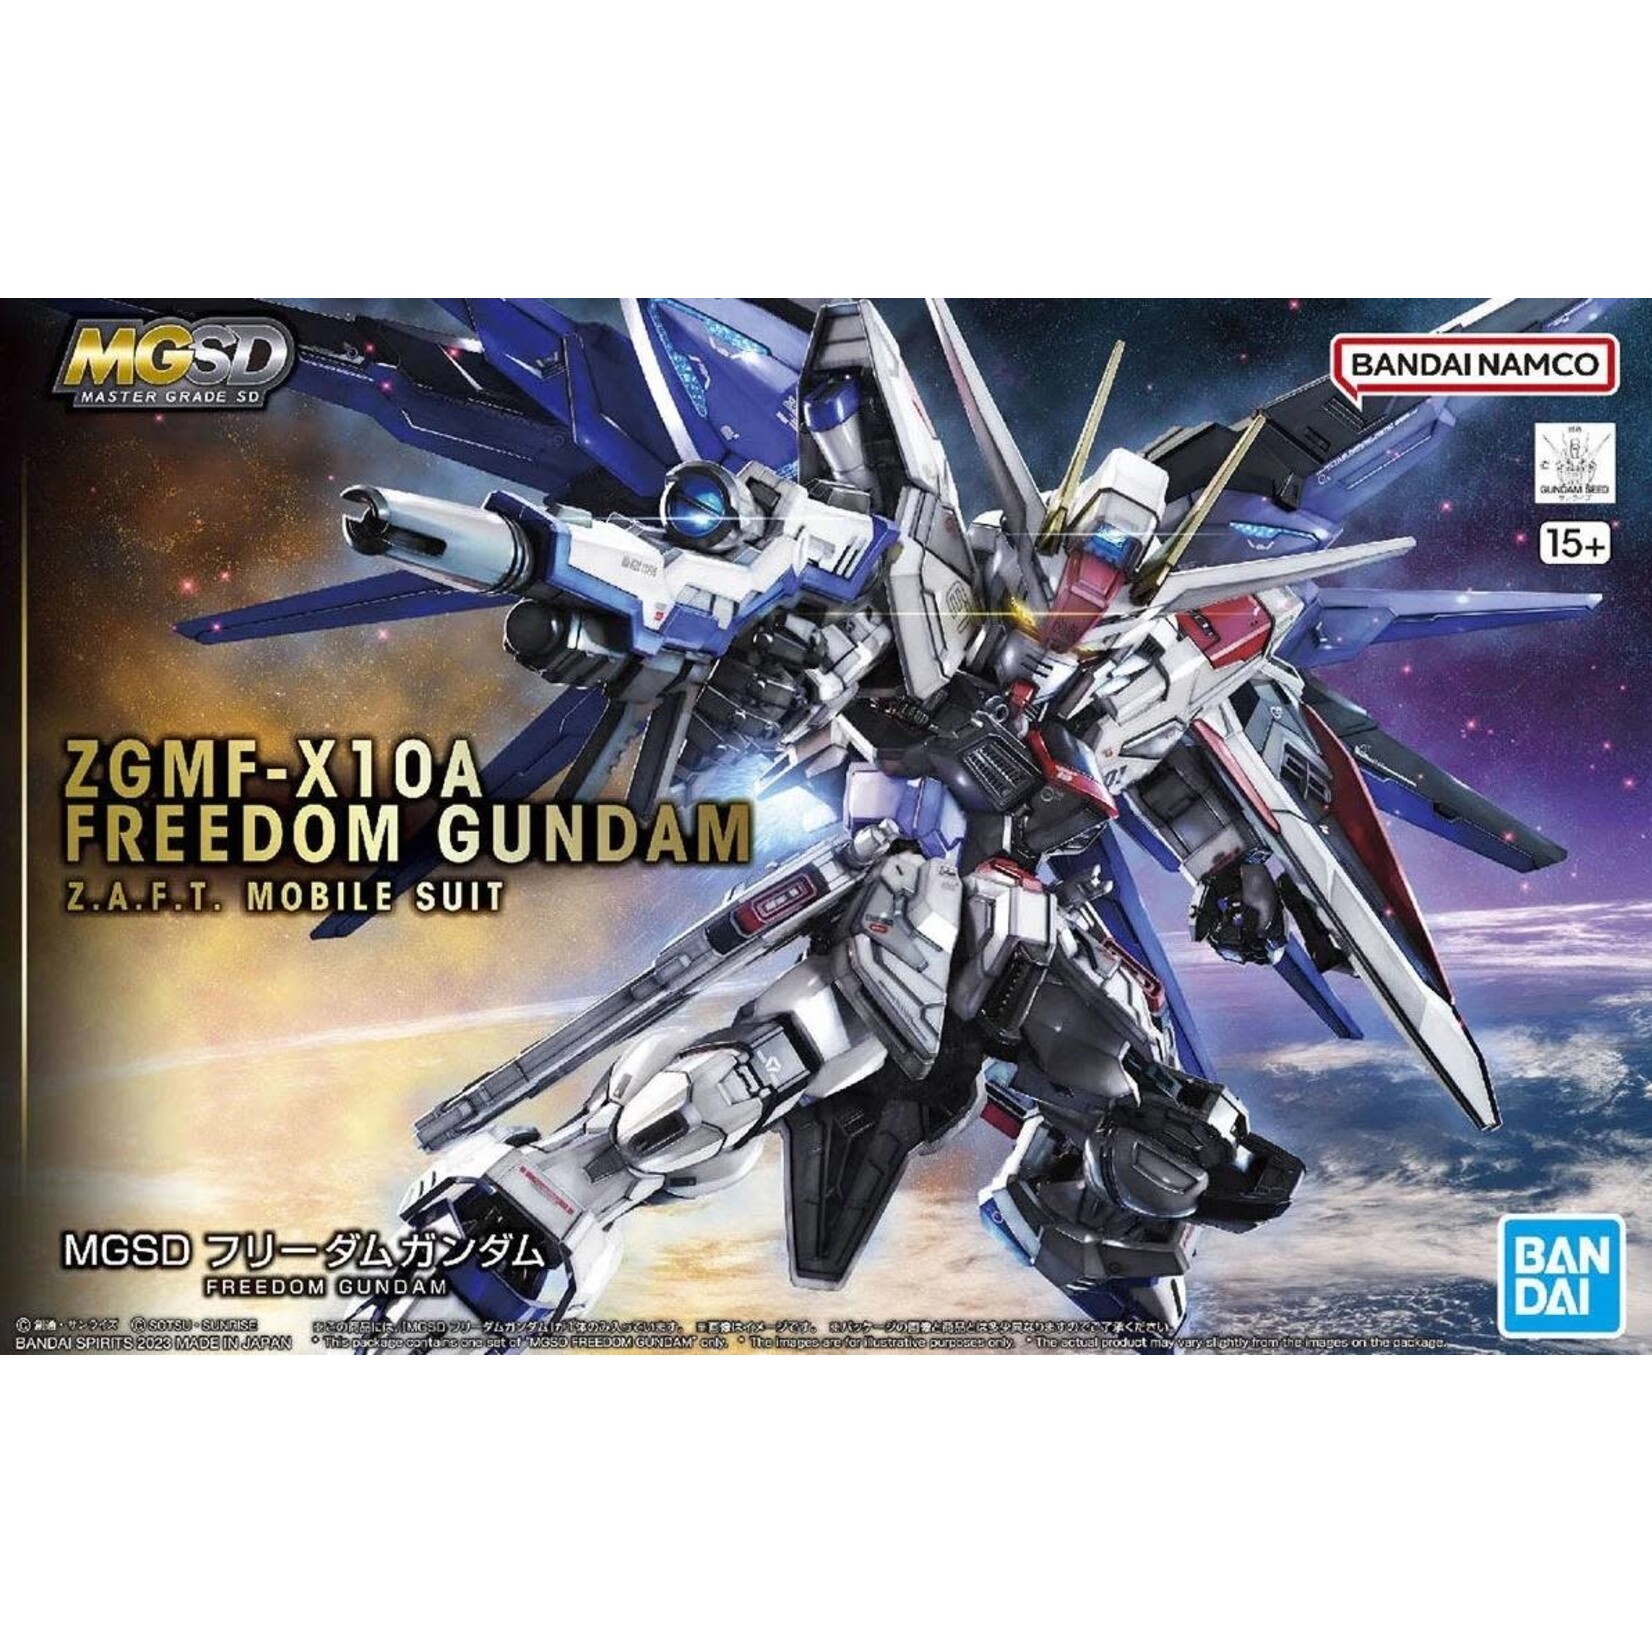 Bandai Bandai 2619354 MGSD ZGMF-X10A Freedom Gundam "Mobile Suit Gundam Seed" Master Grade SD